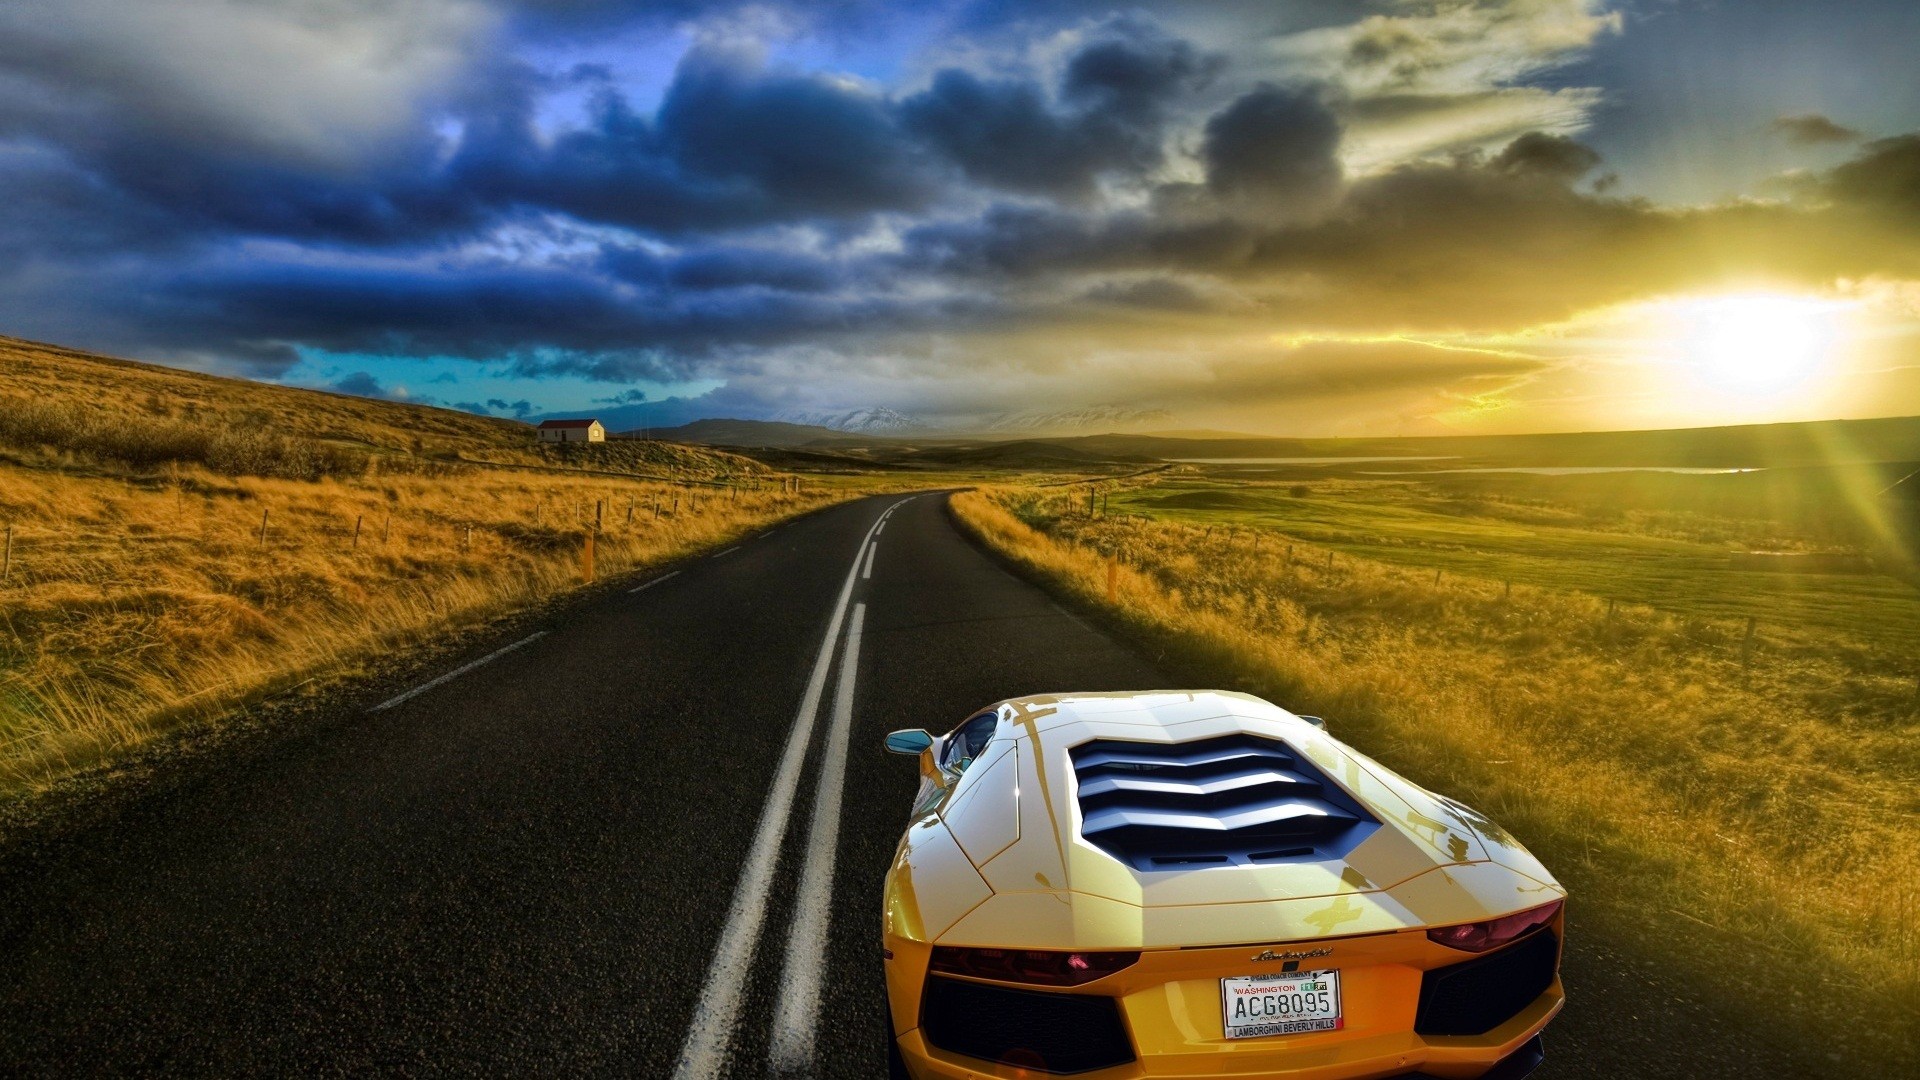 Supercar Lamborghini Wallpaper | Wallpapers, Backgrounds, Images ...